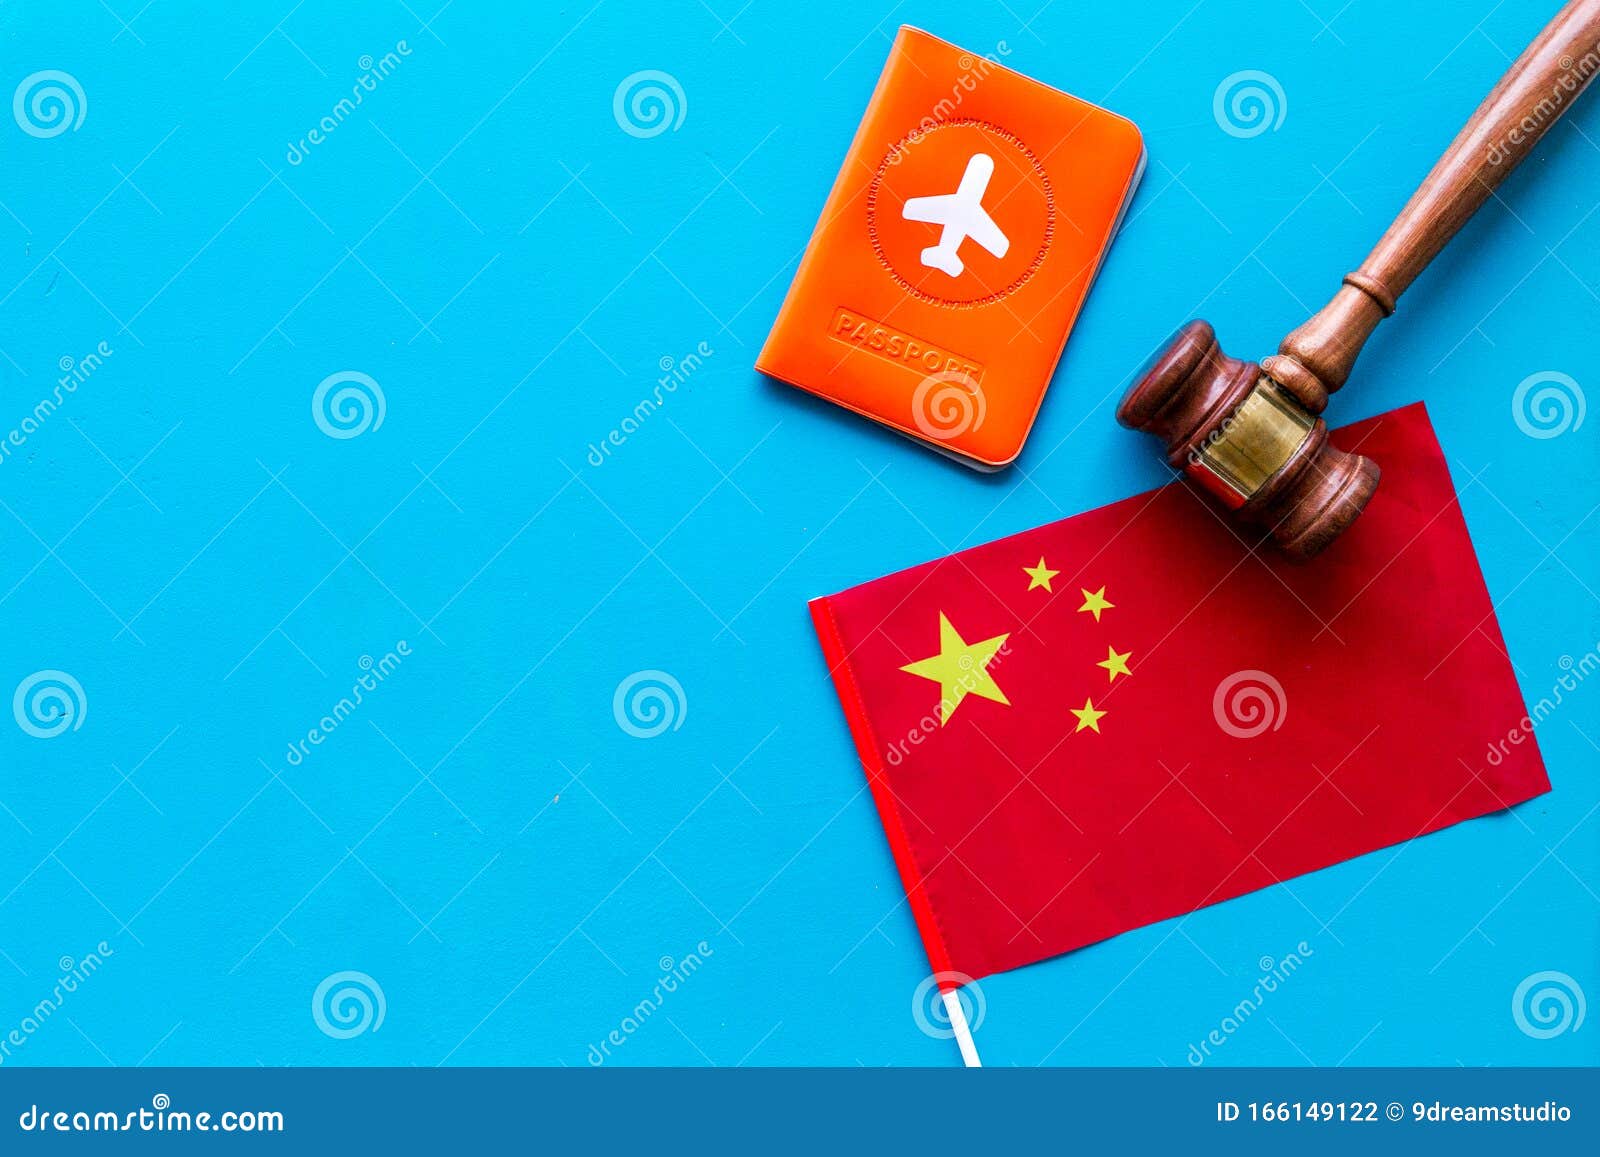 Conceito de visto para a China Bandeira chinesa perto do passaporte e martelo do juiz no espaço de cópia de cima para baixo azul. Conceito de visto para a China Bandeira chinesa perto do passaporte e martelo do juiz sobre fundo azul de cima para baixo